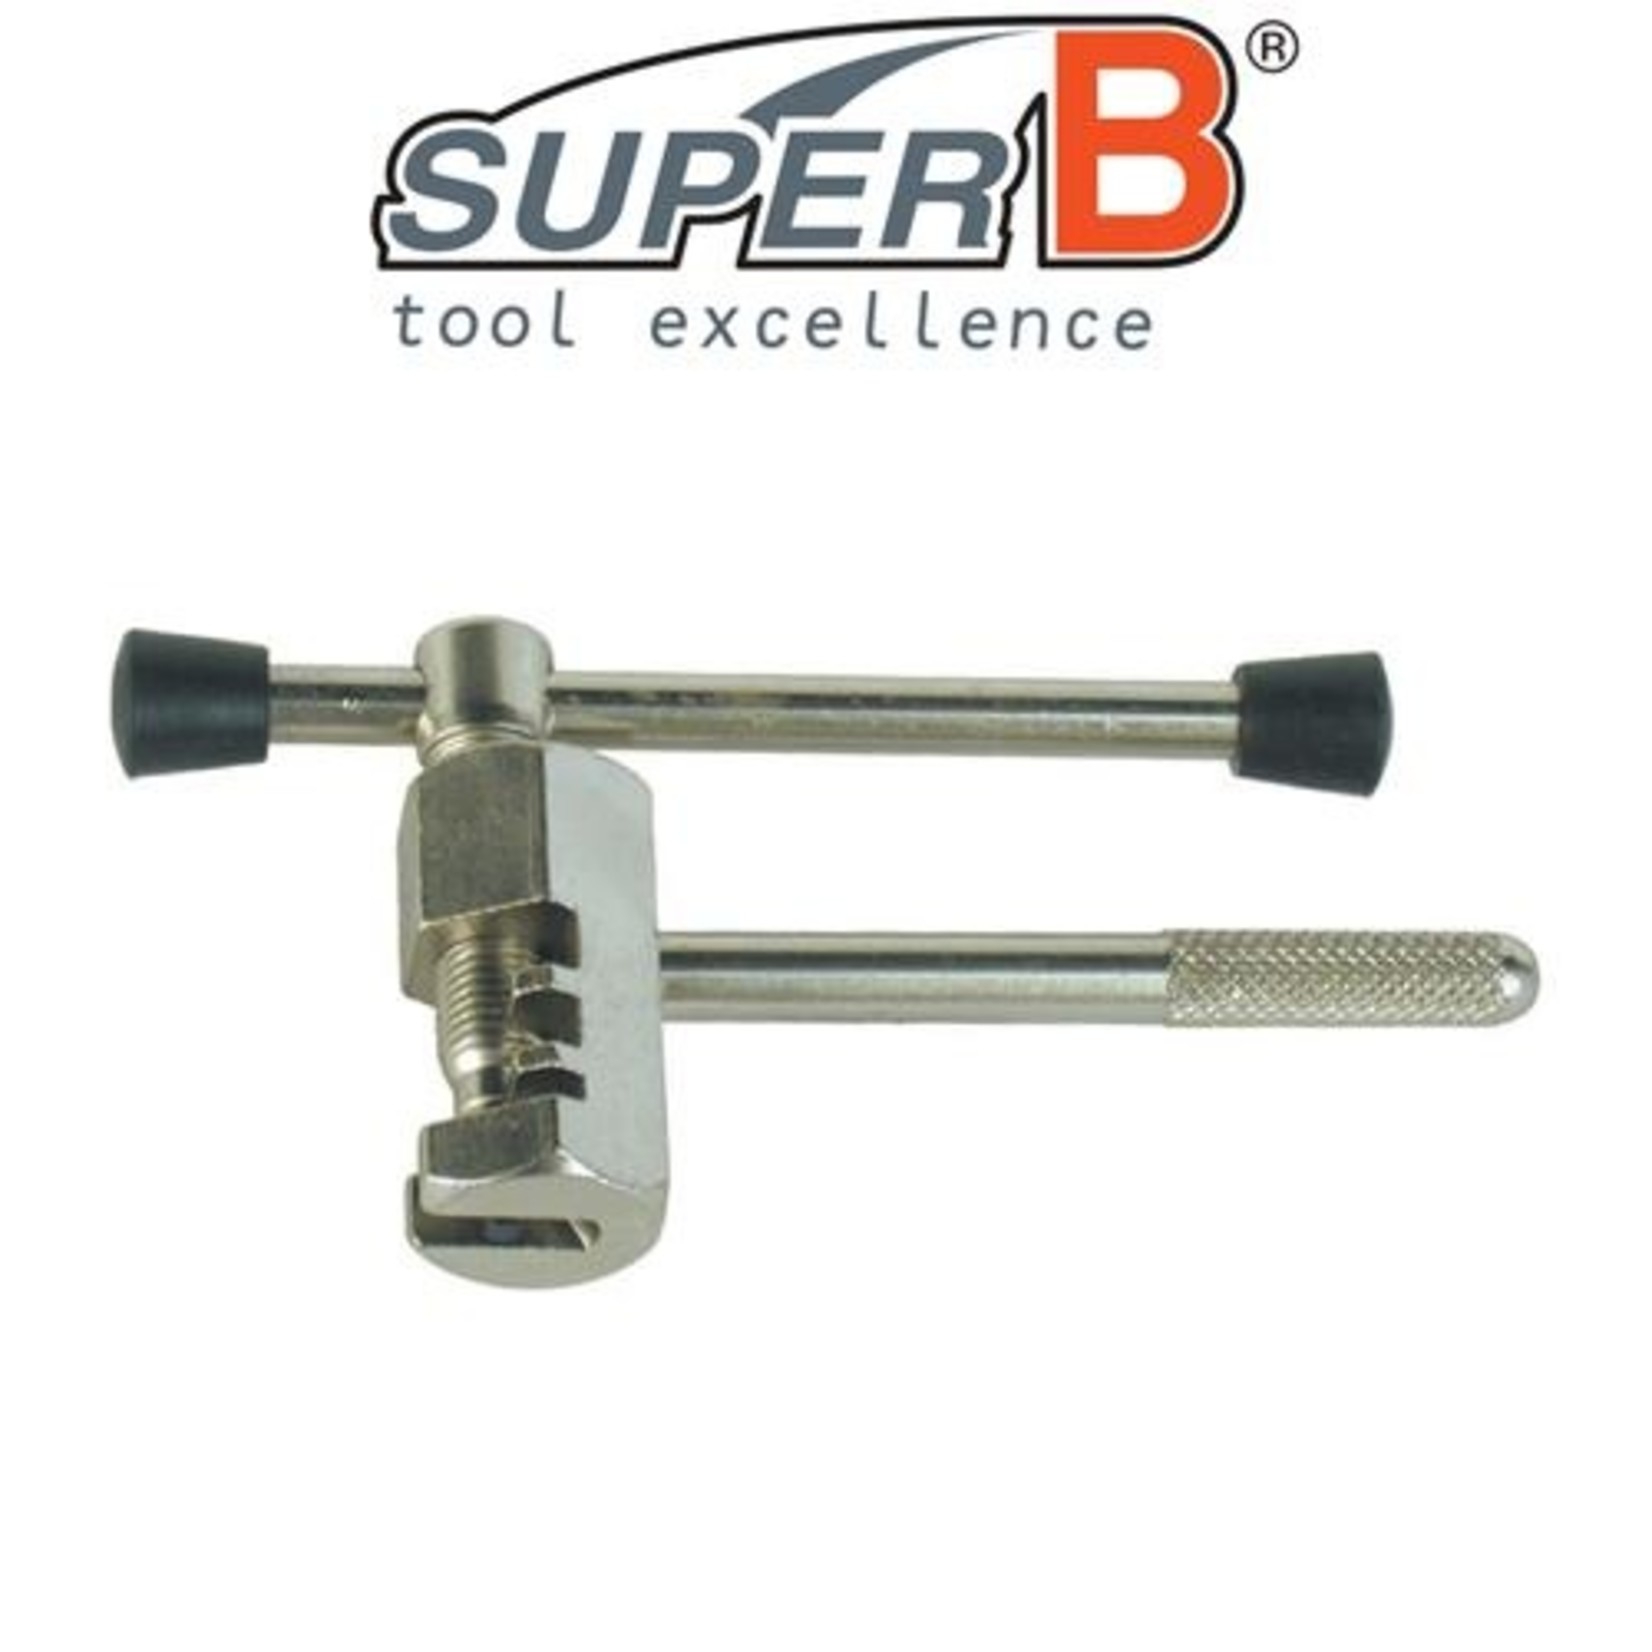 Super B SuperB Chain Rivet Extractor - Bike Tool - TB3305